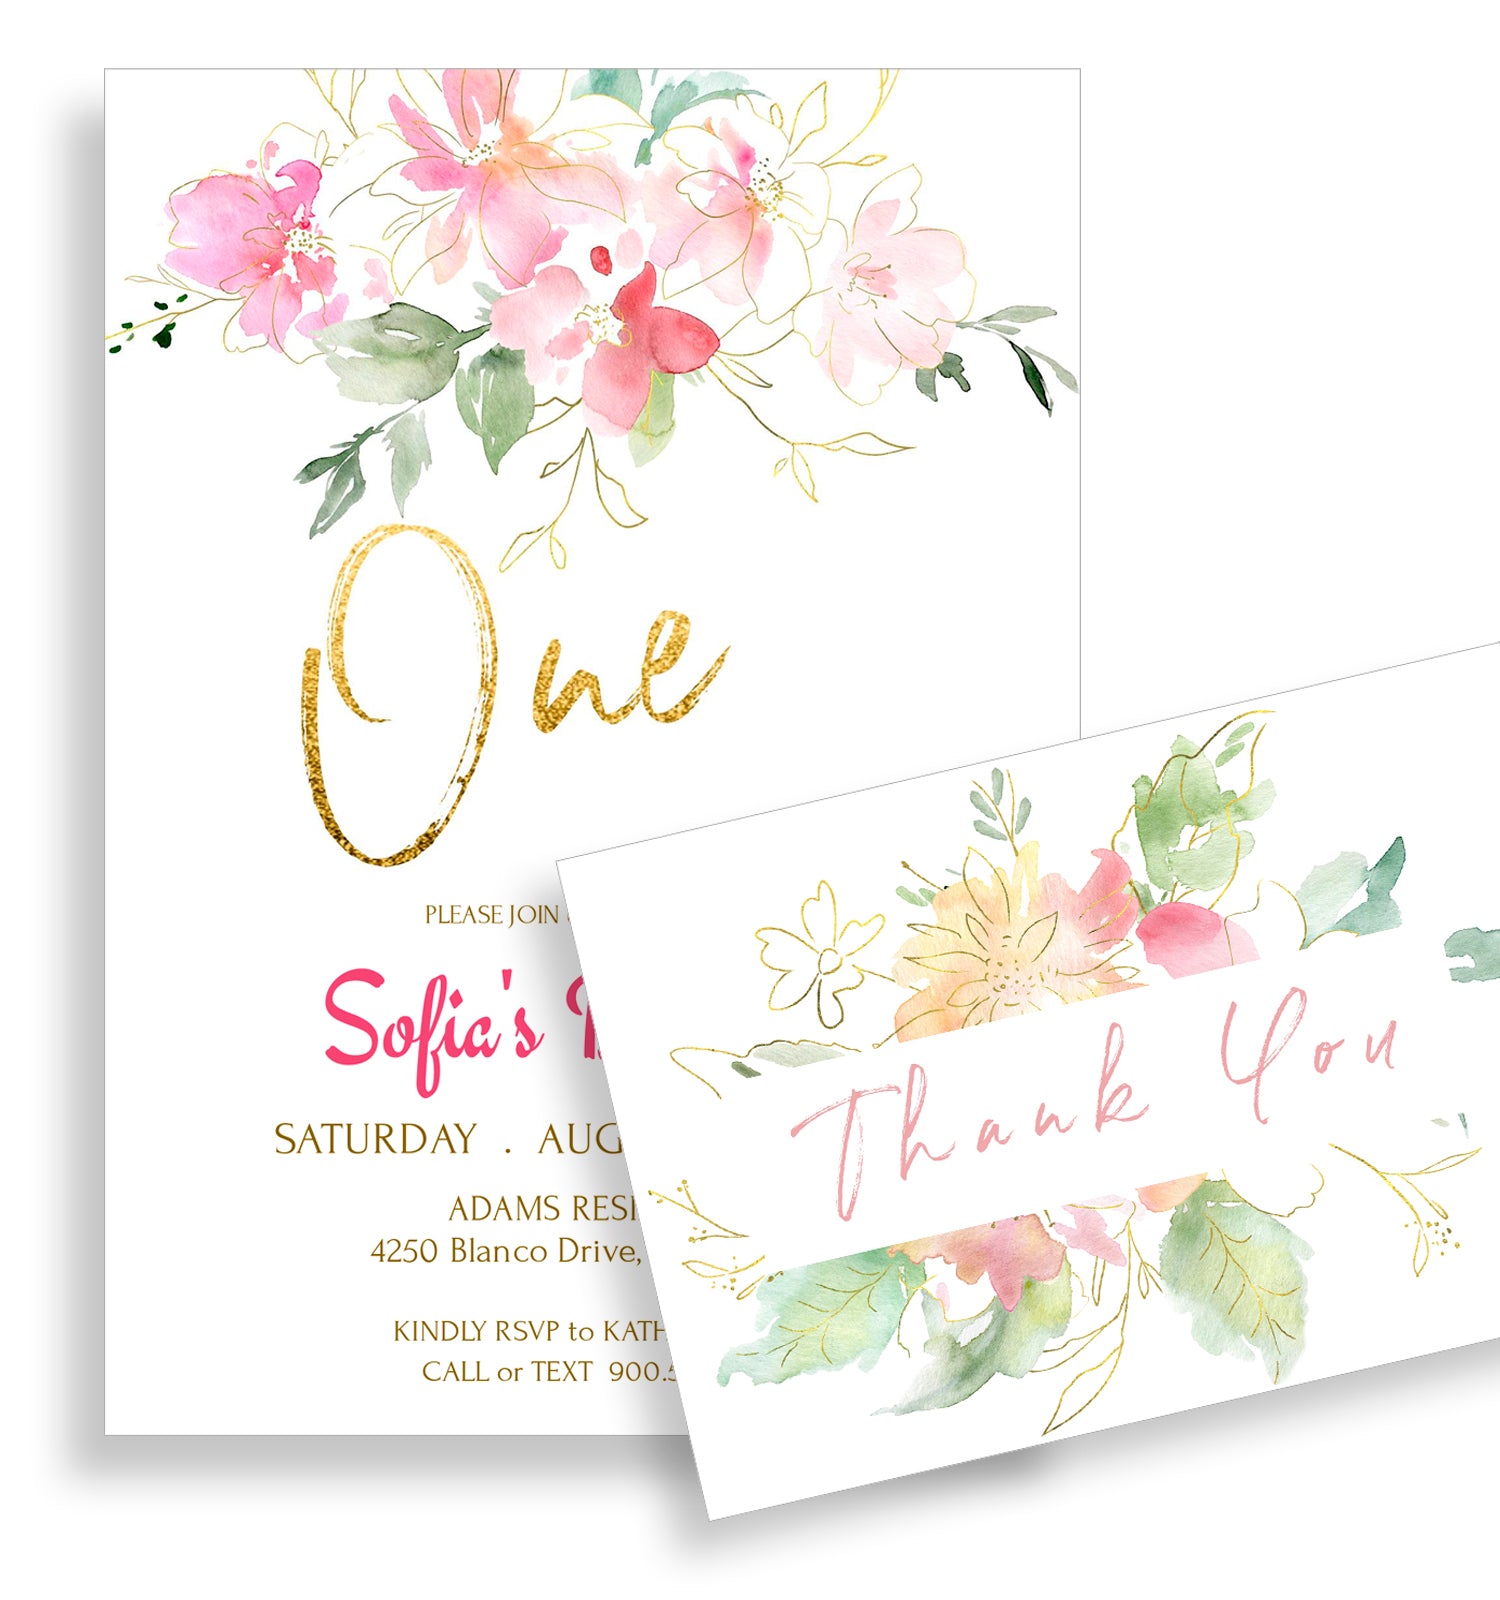 Birthday Party Invitation, Thank You Card Templates, Blush Pink Design - BD009